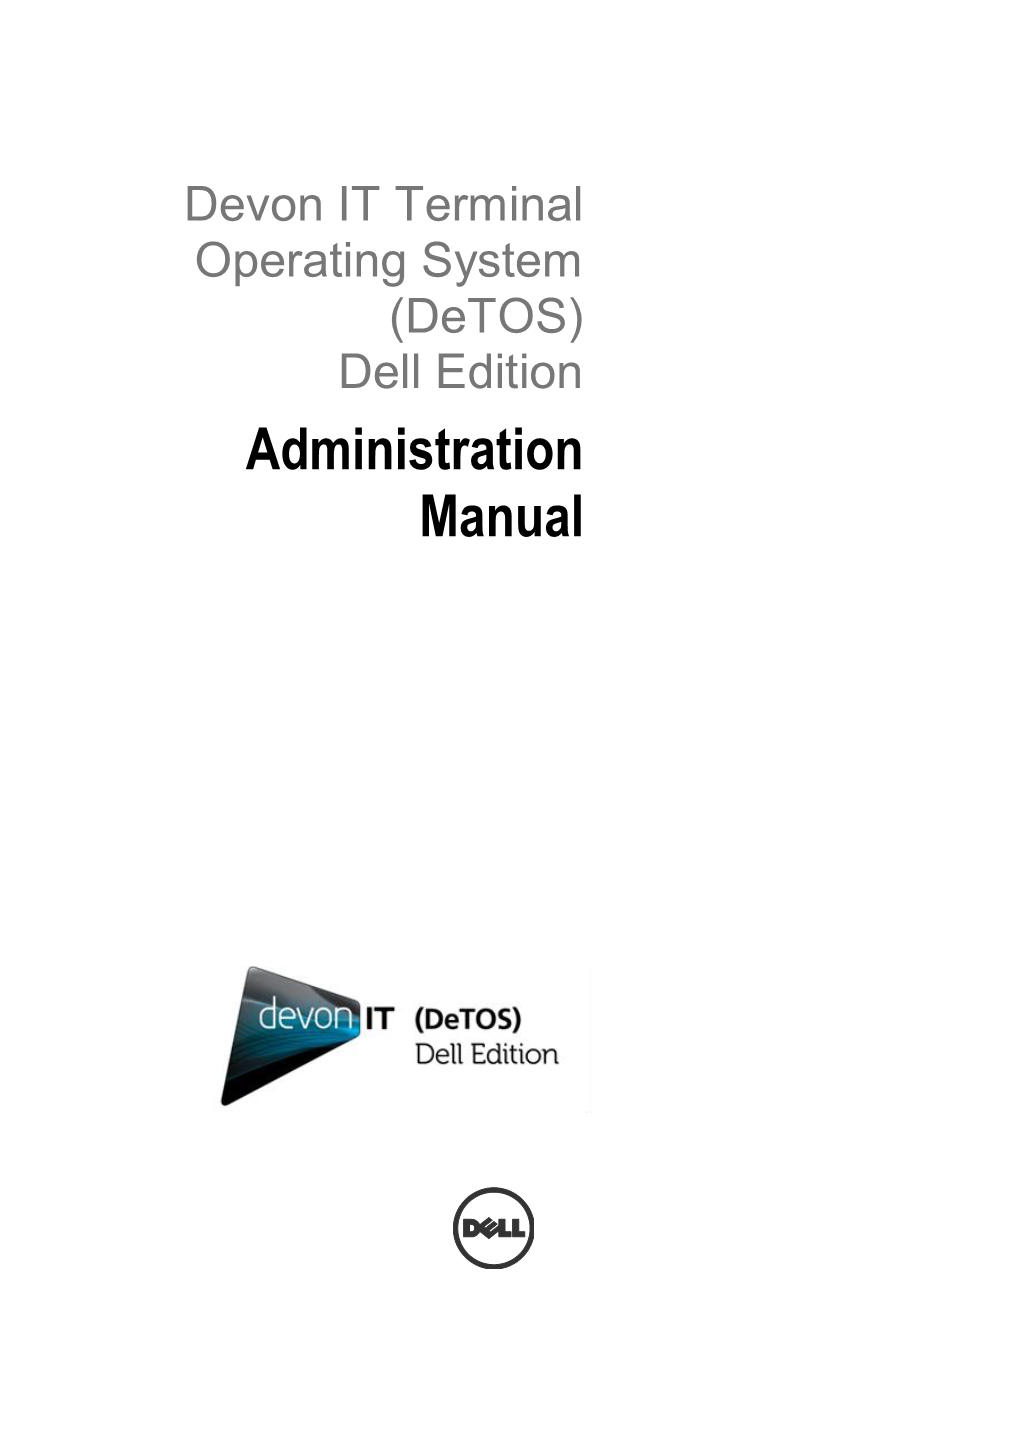 Devon IT Terminal Operating System (Detos) Dell Edition Administration Manual